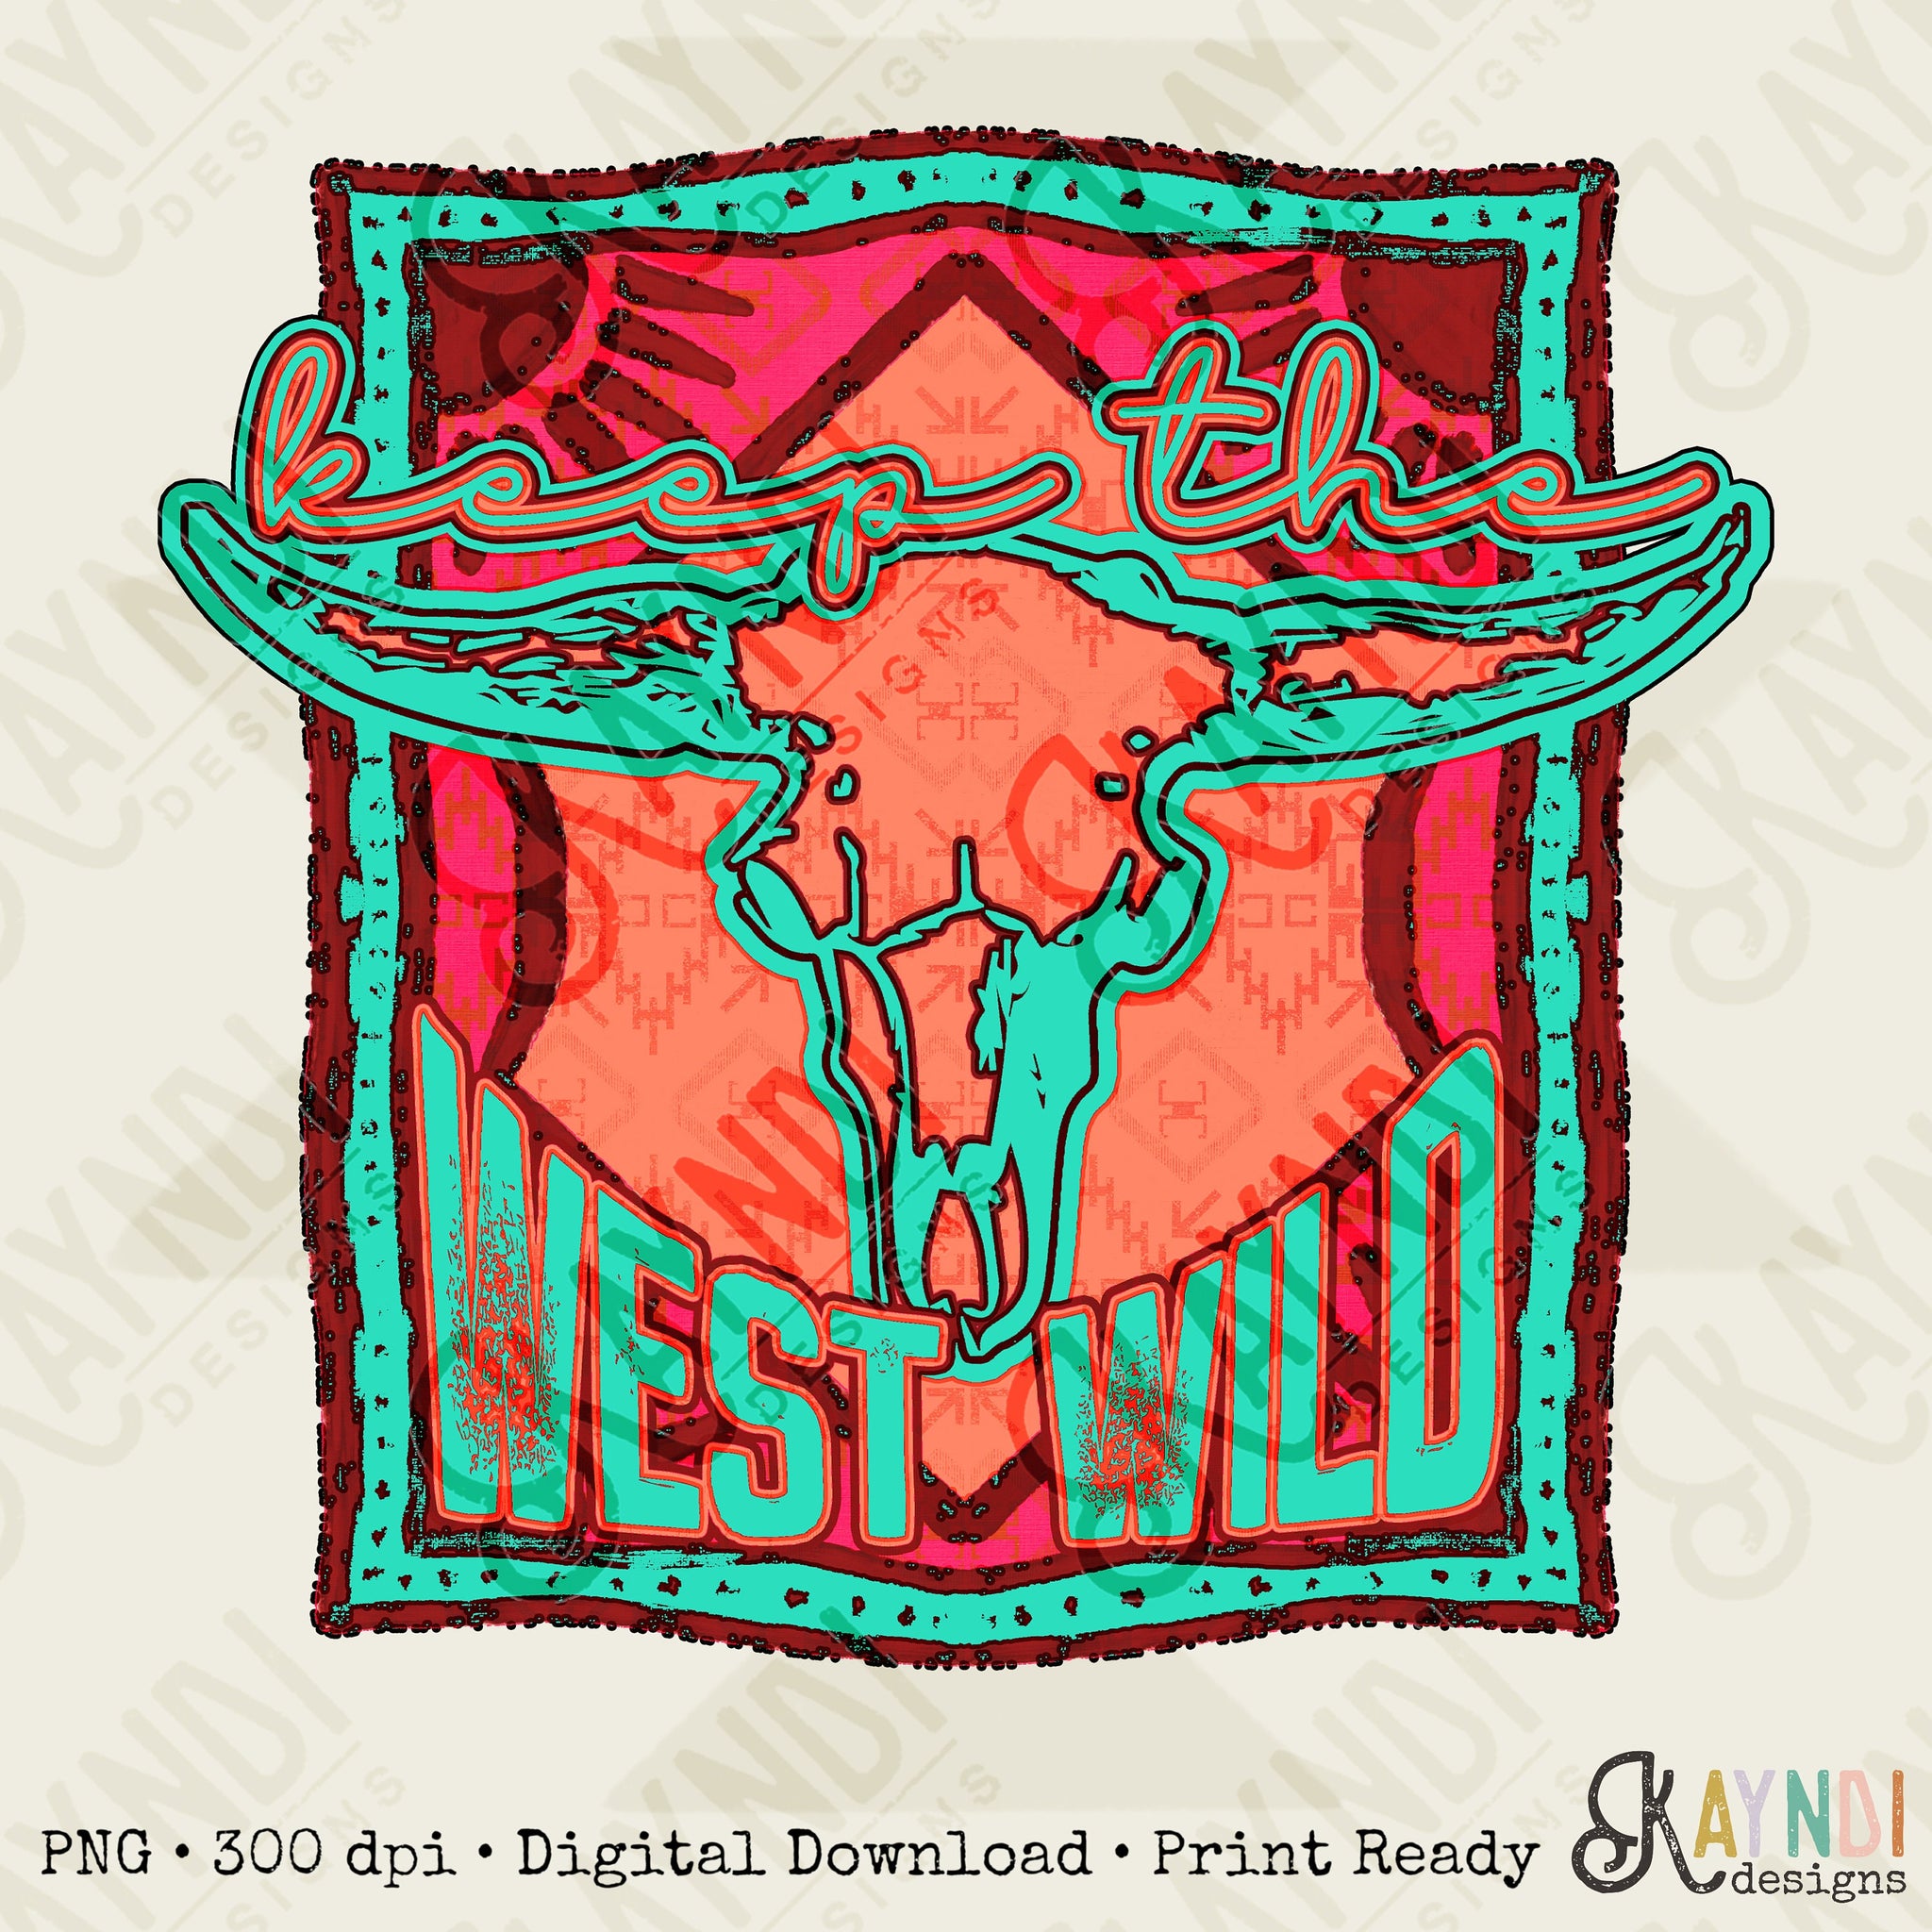 Keep The Wild West Sublimation Design PNG Digital Download Printable